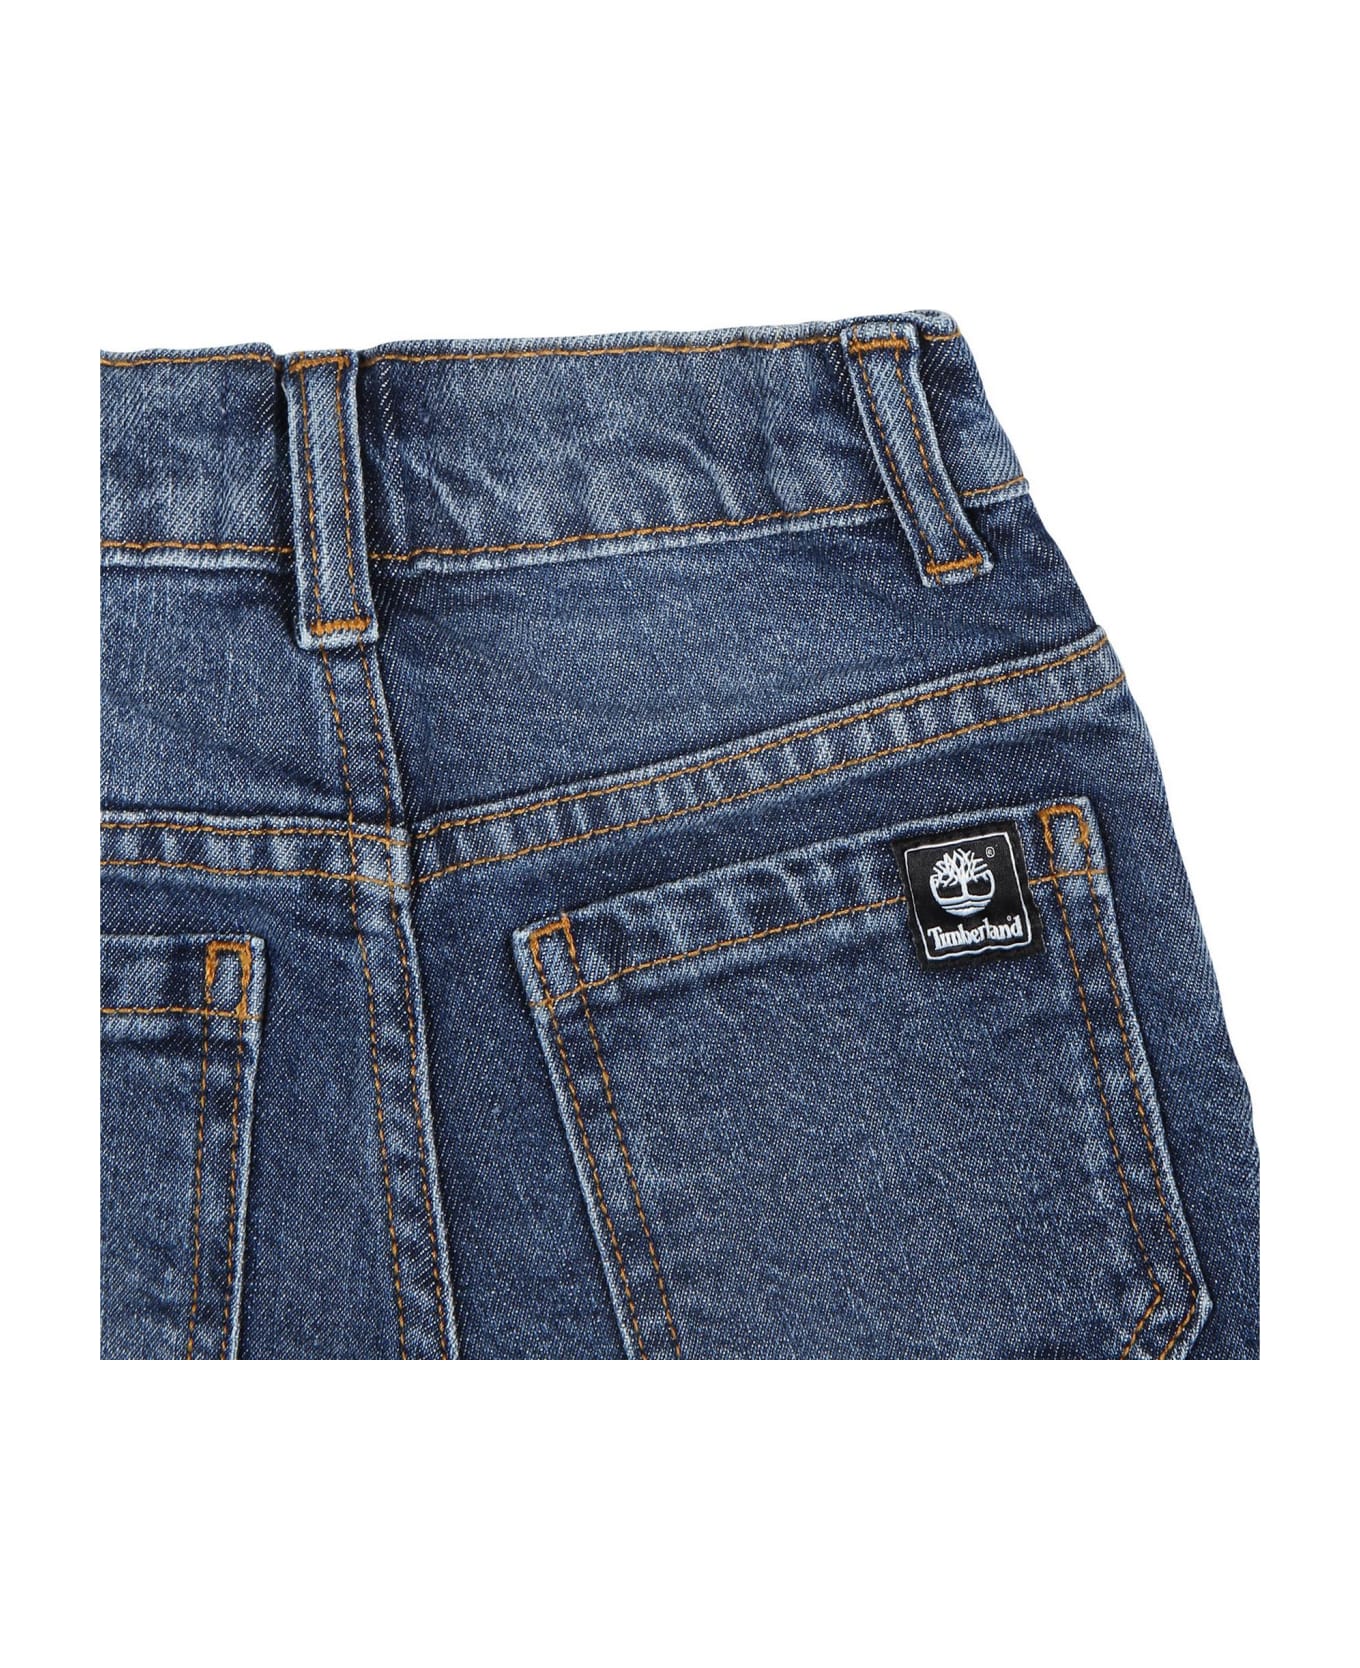 Timberland Denim Jeans For Baby Boy With Logo - Denim